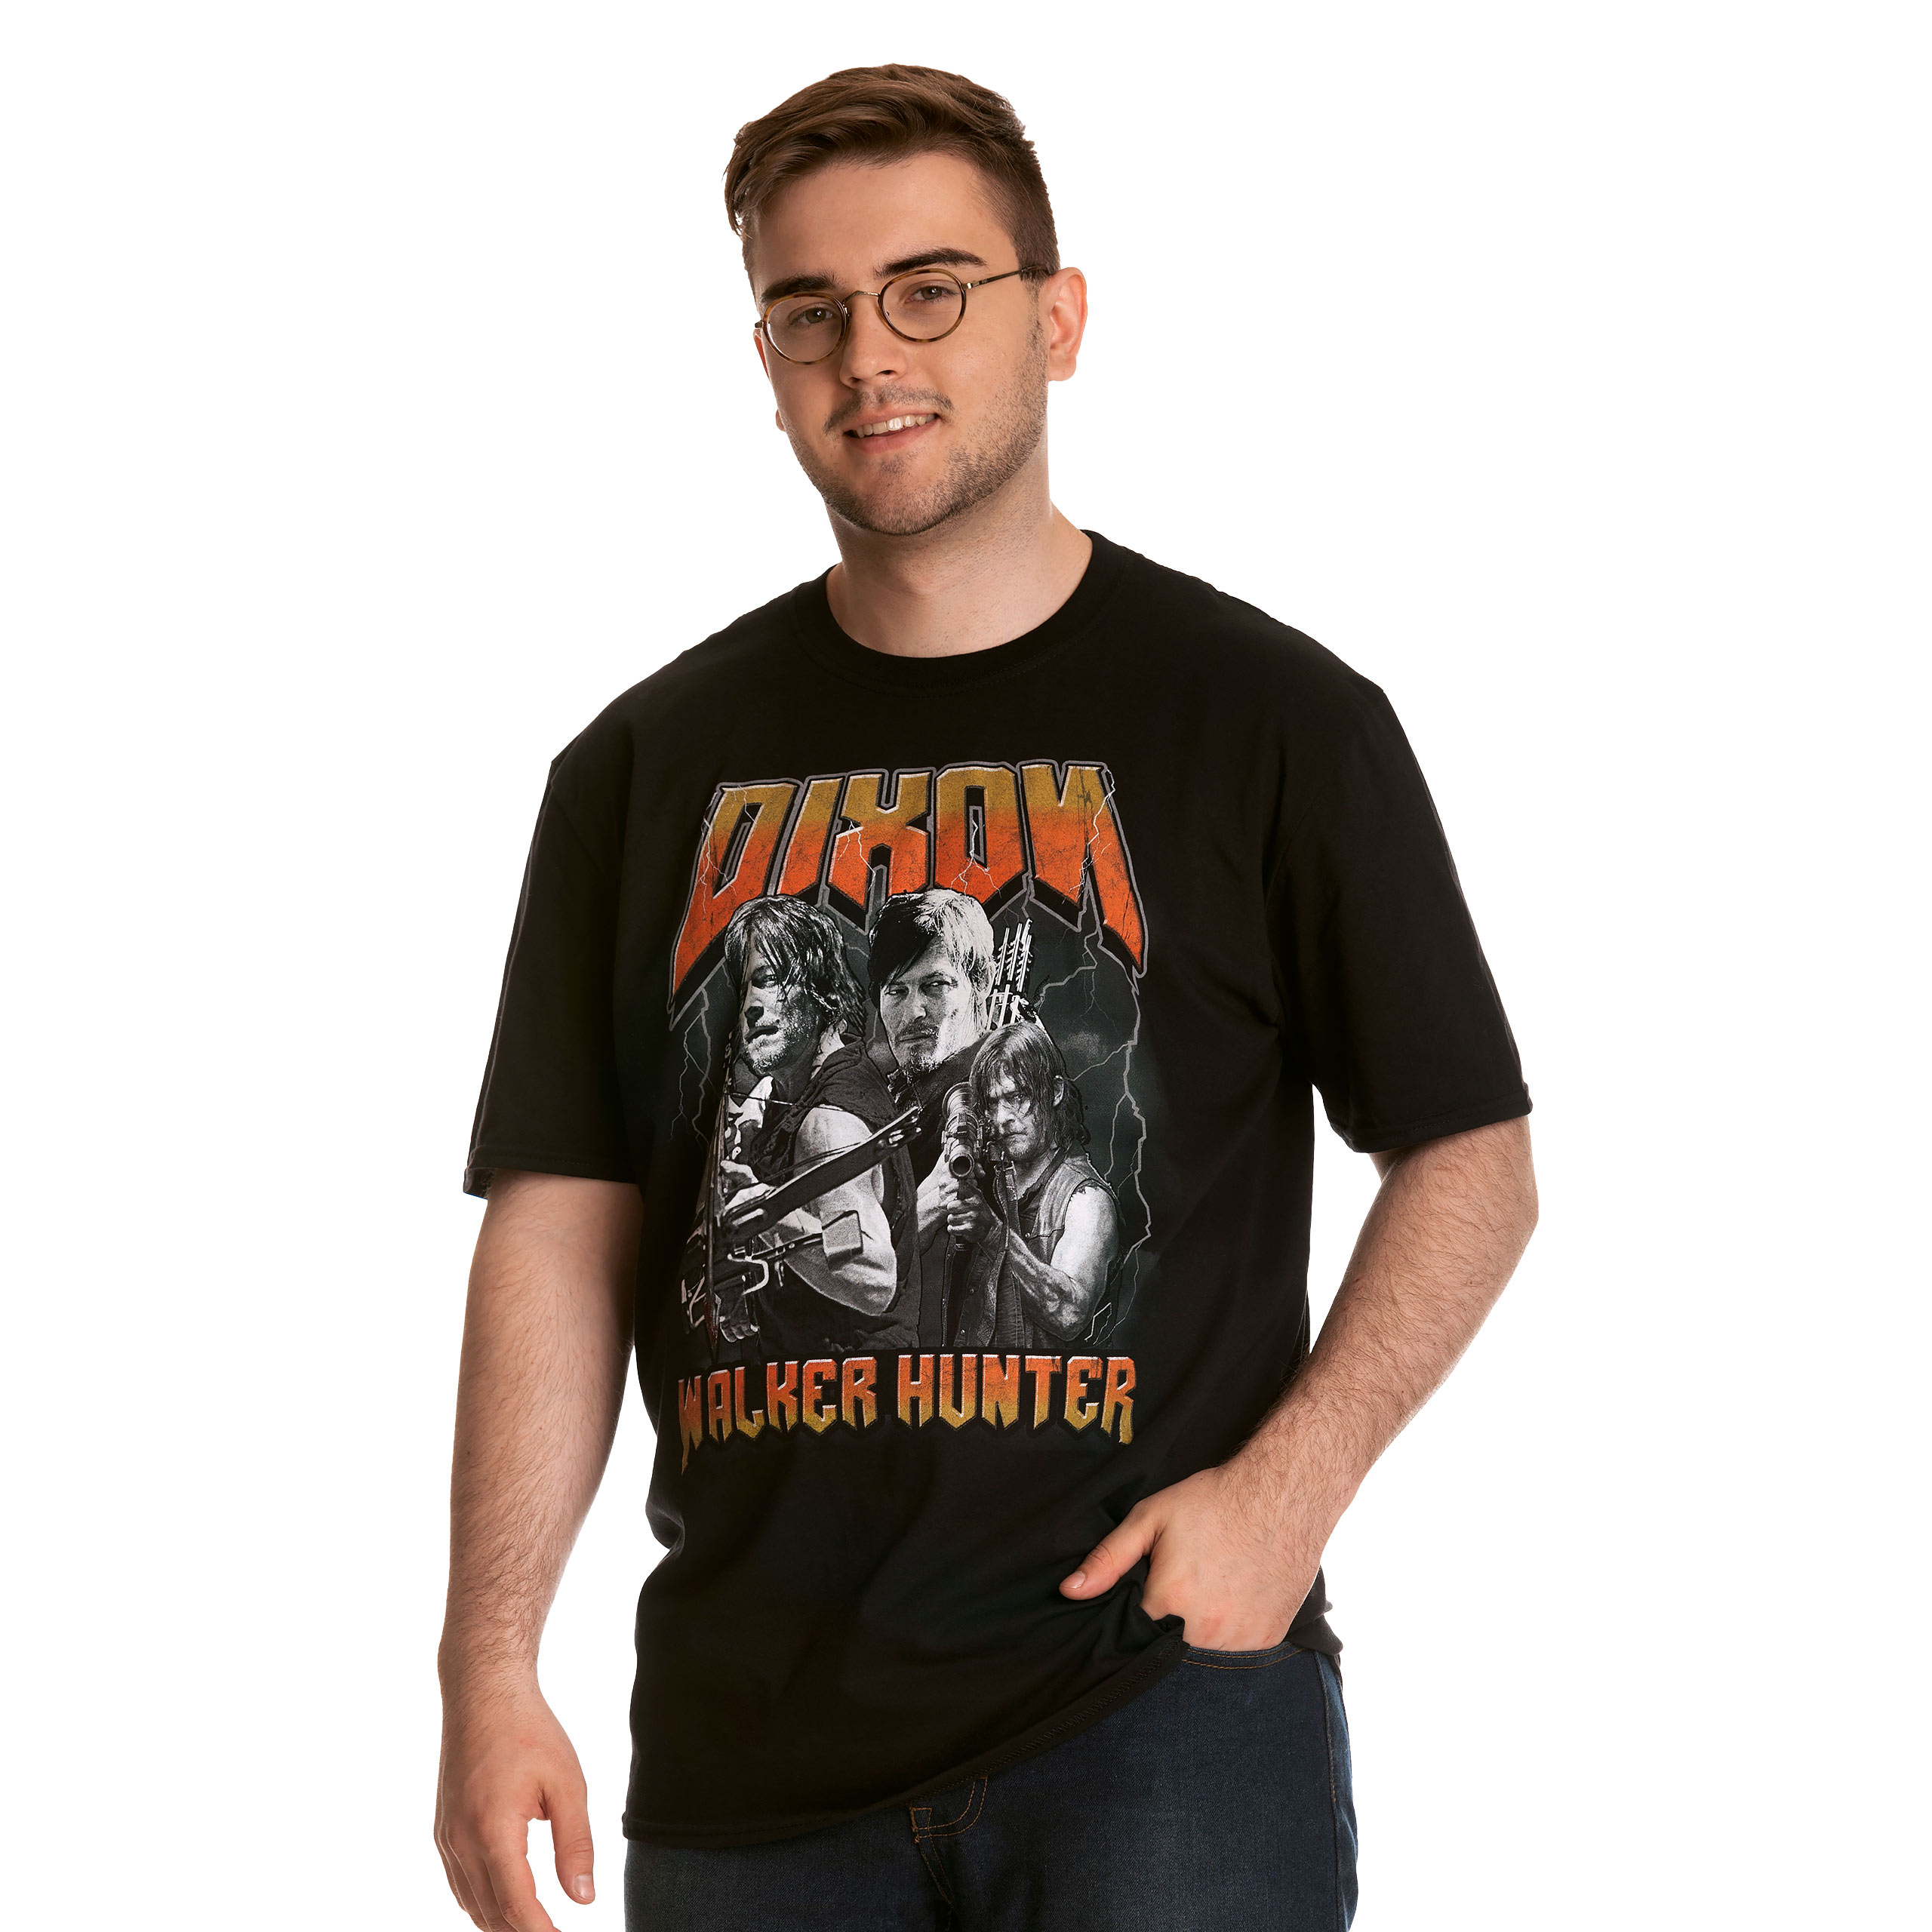 Walking Dead - Dixon Walker Hunter T-Shirt Black